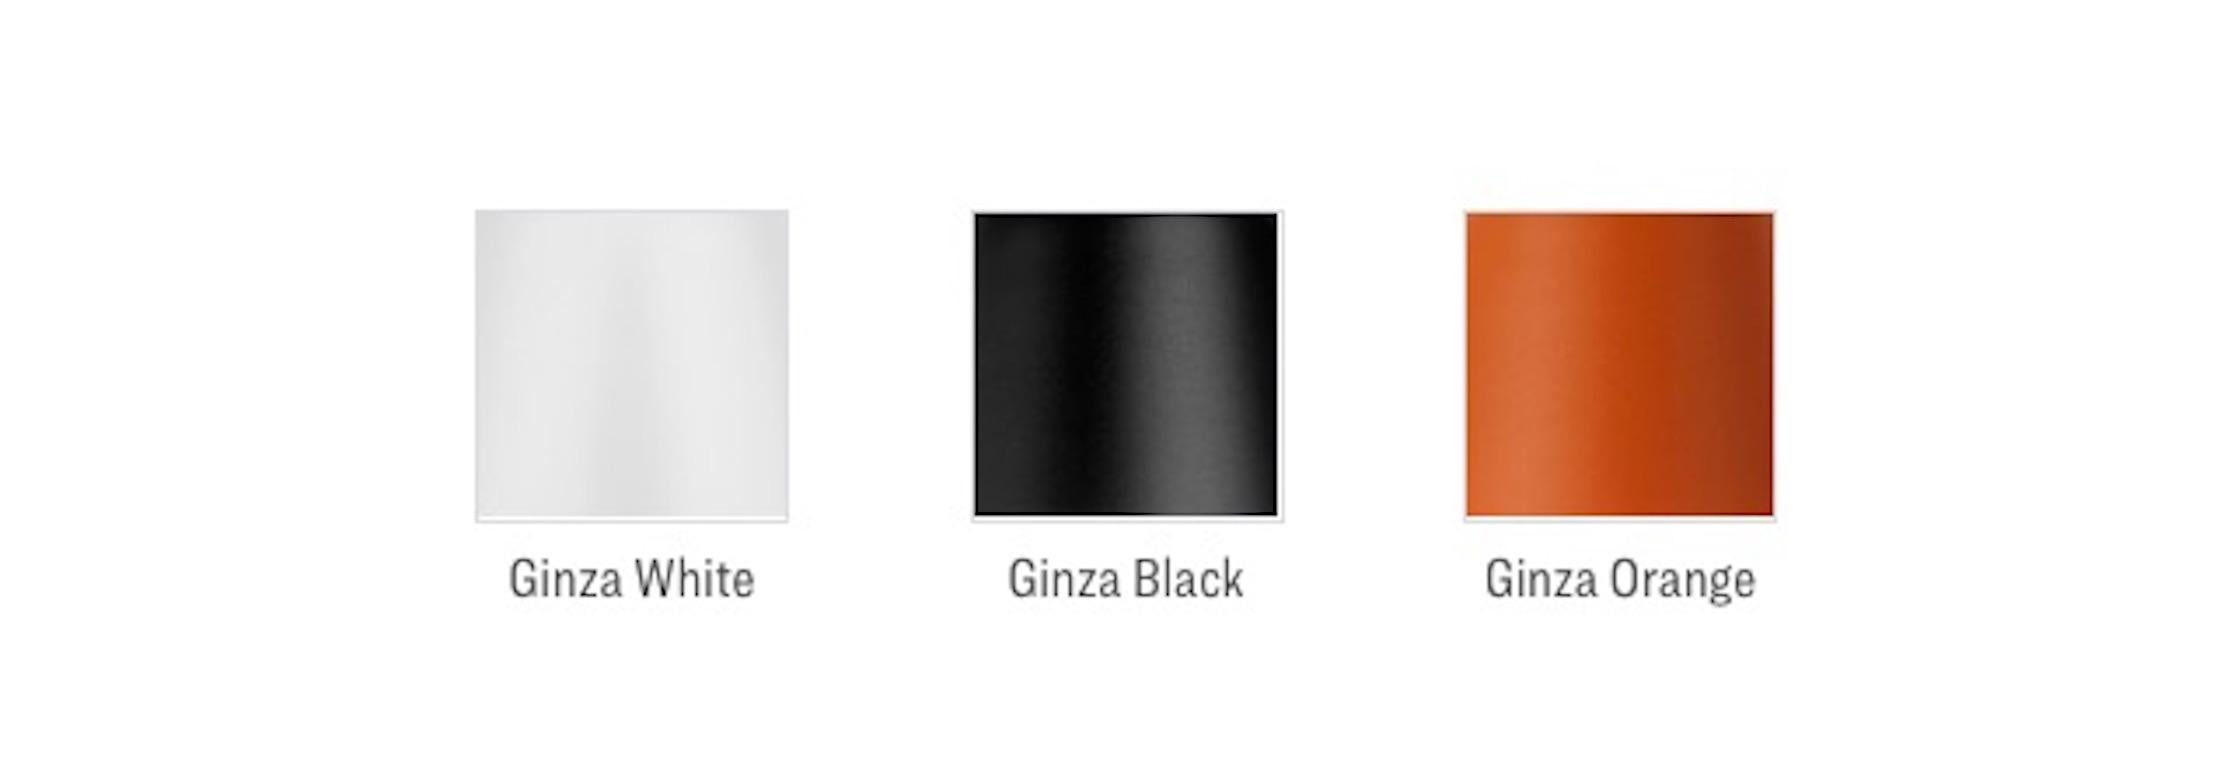 Aluminum Zero Ginza Horizontal Pendant in Black by Thomas Bernstrand For Sale